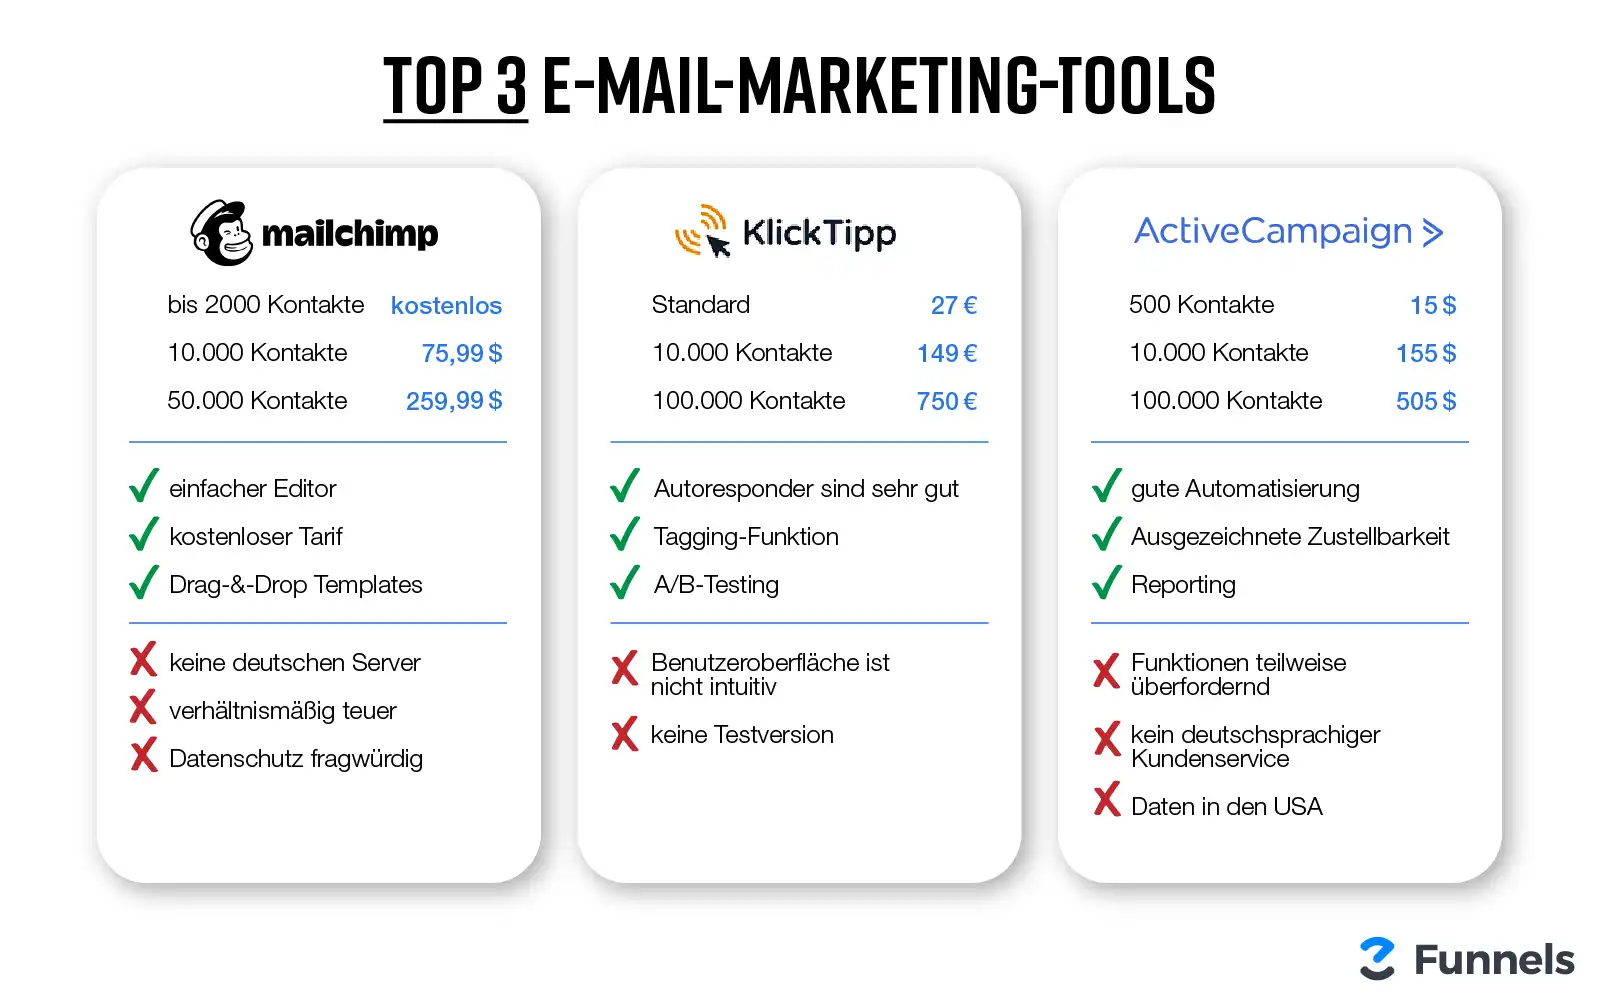 Top E-Mail-Marketing-Tools